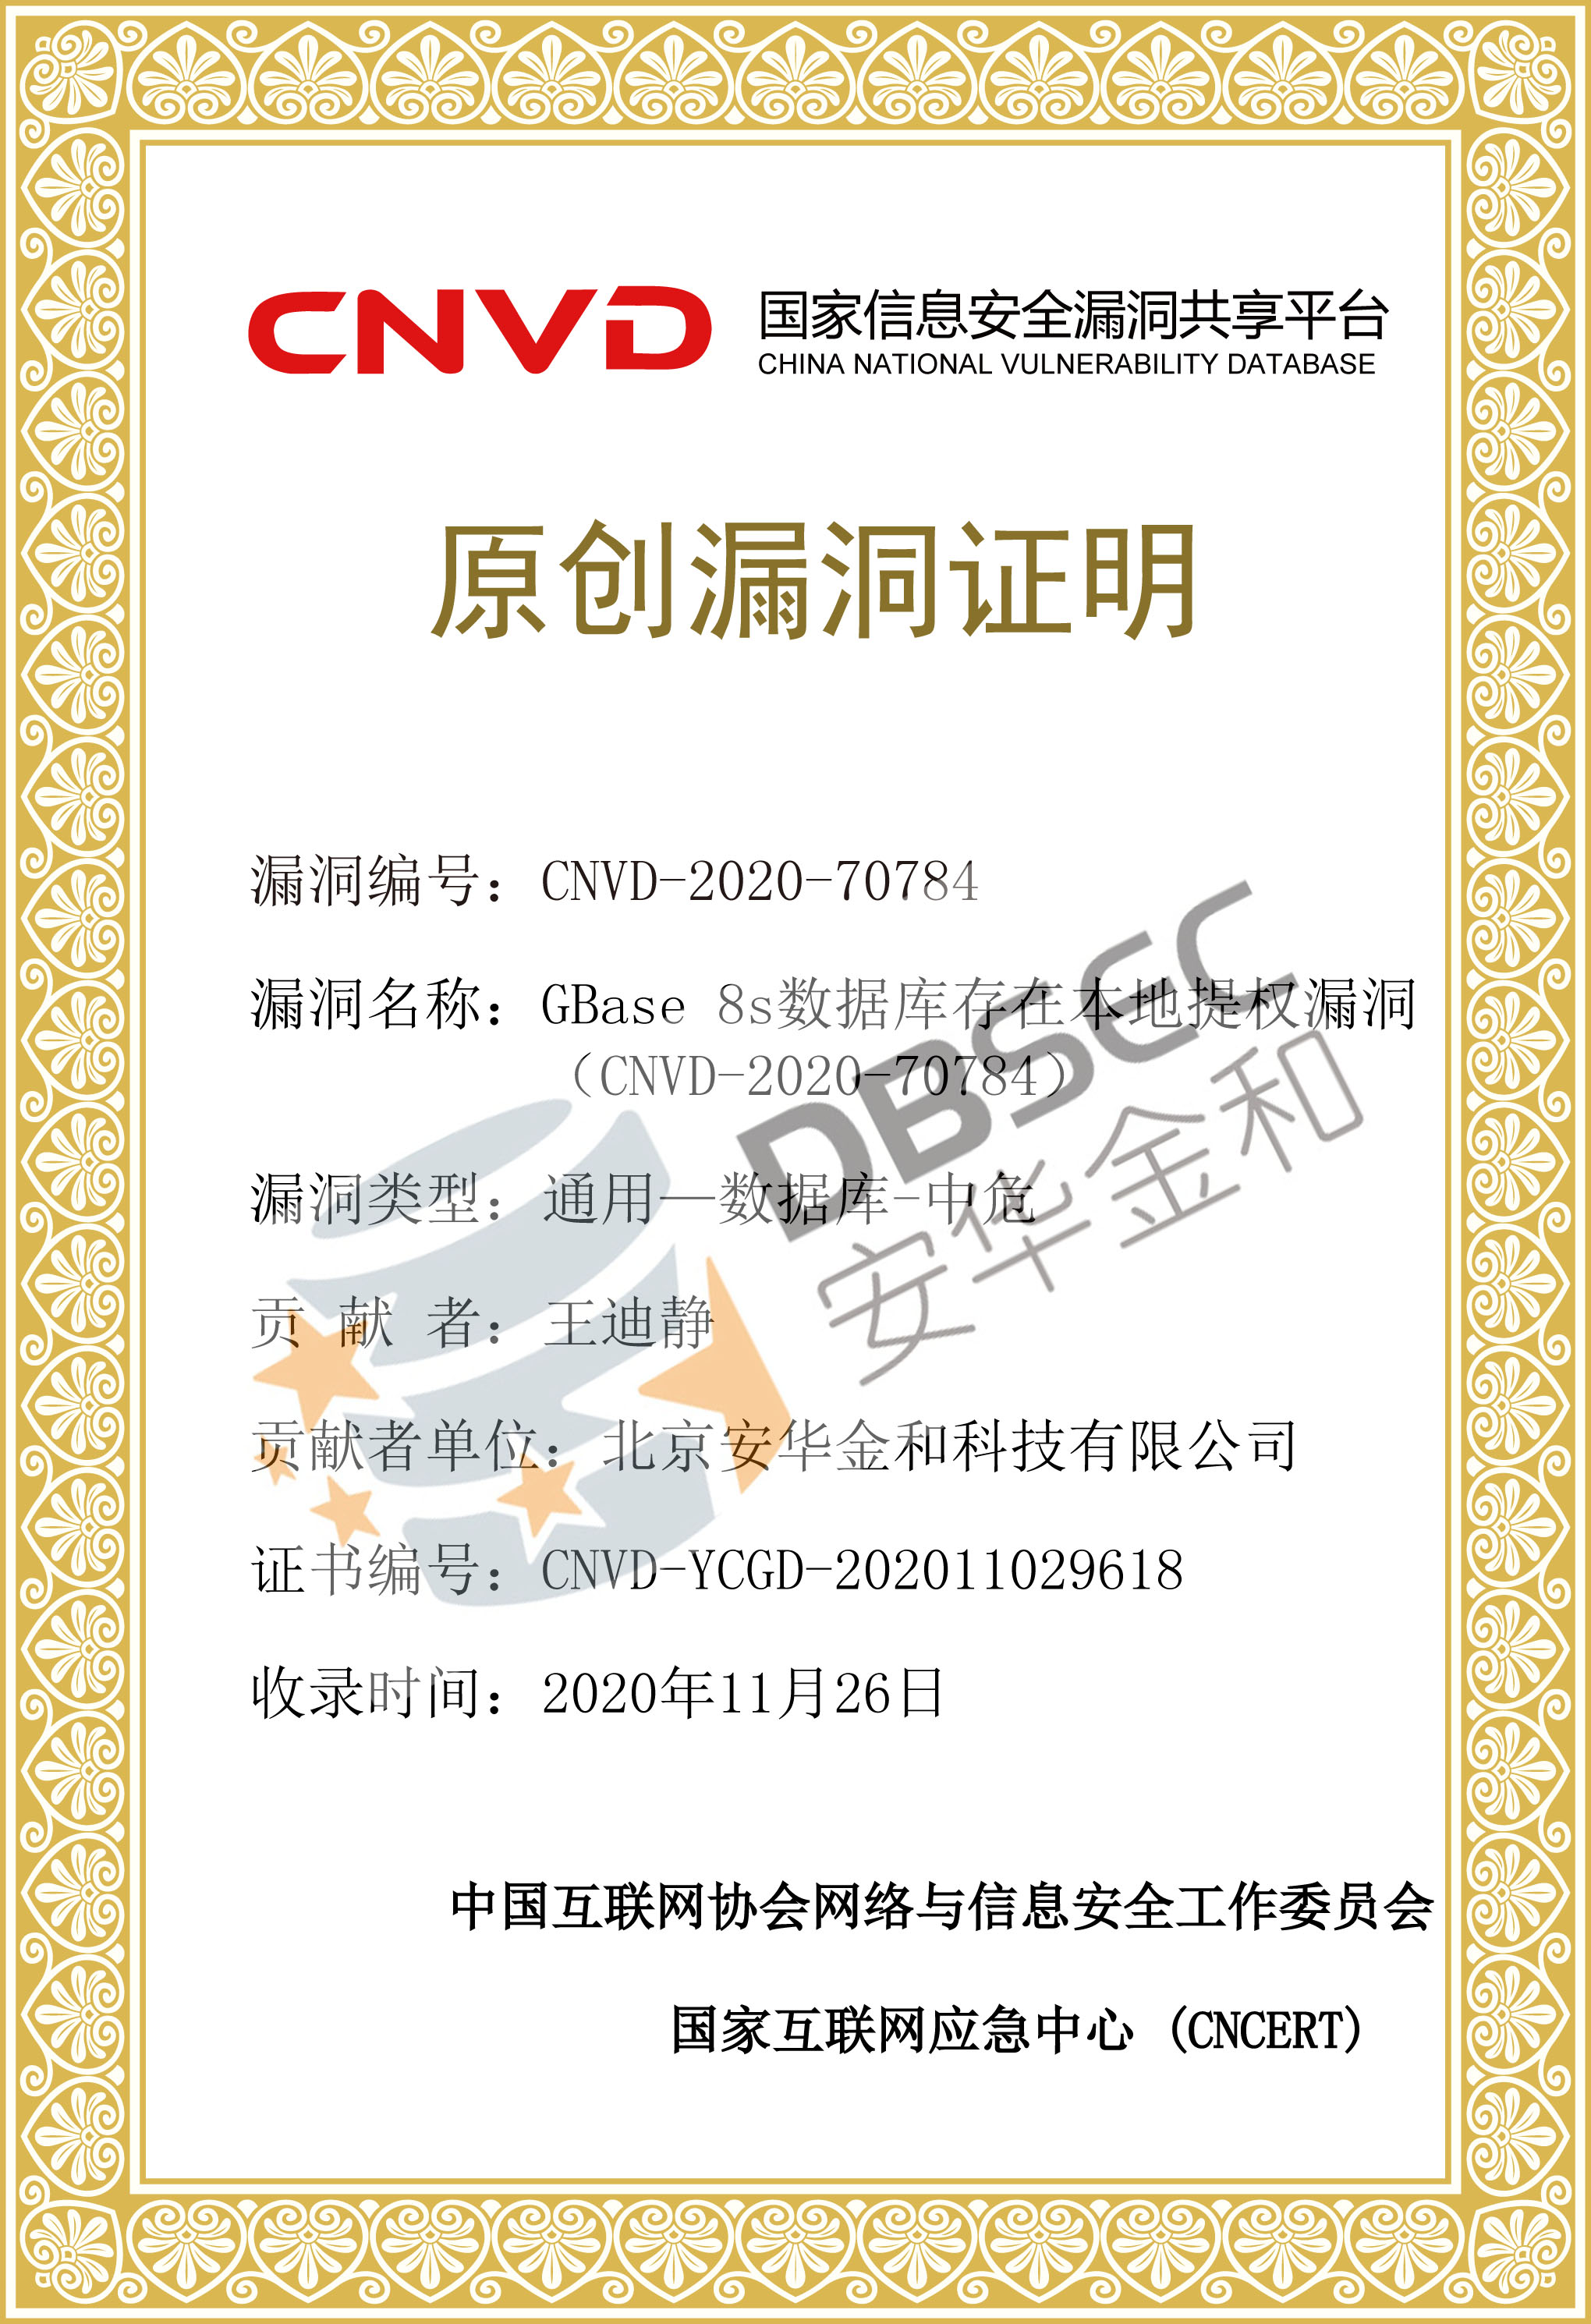 CNVD-YCGD-202011029618